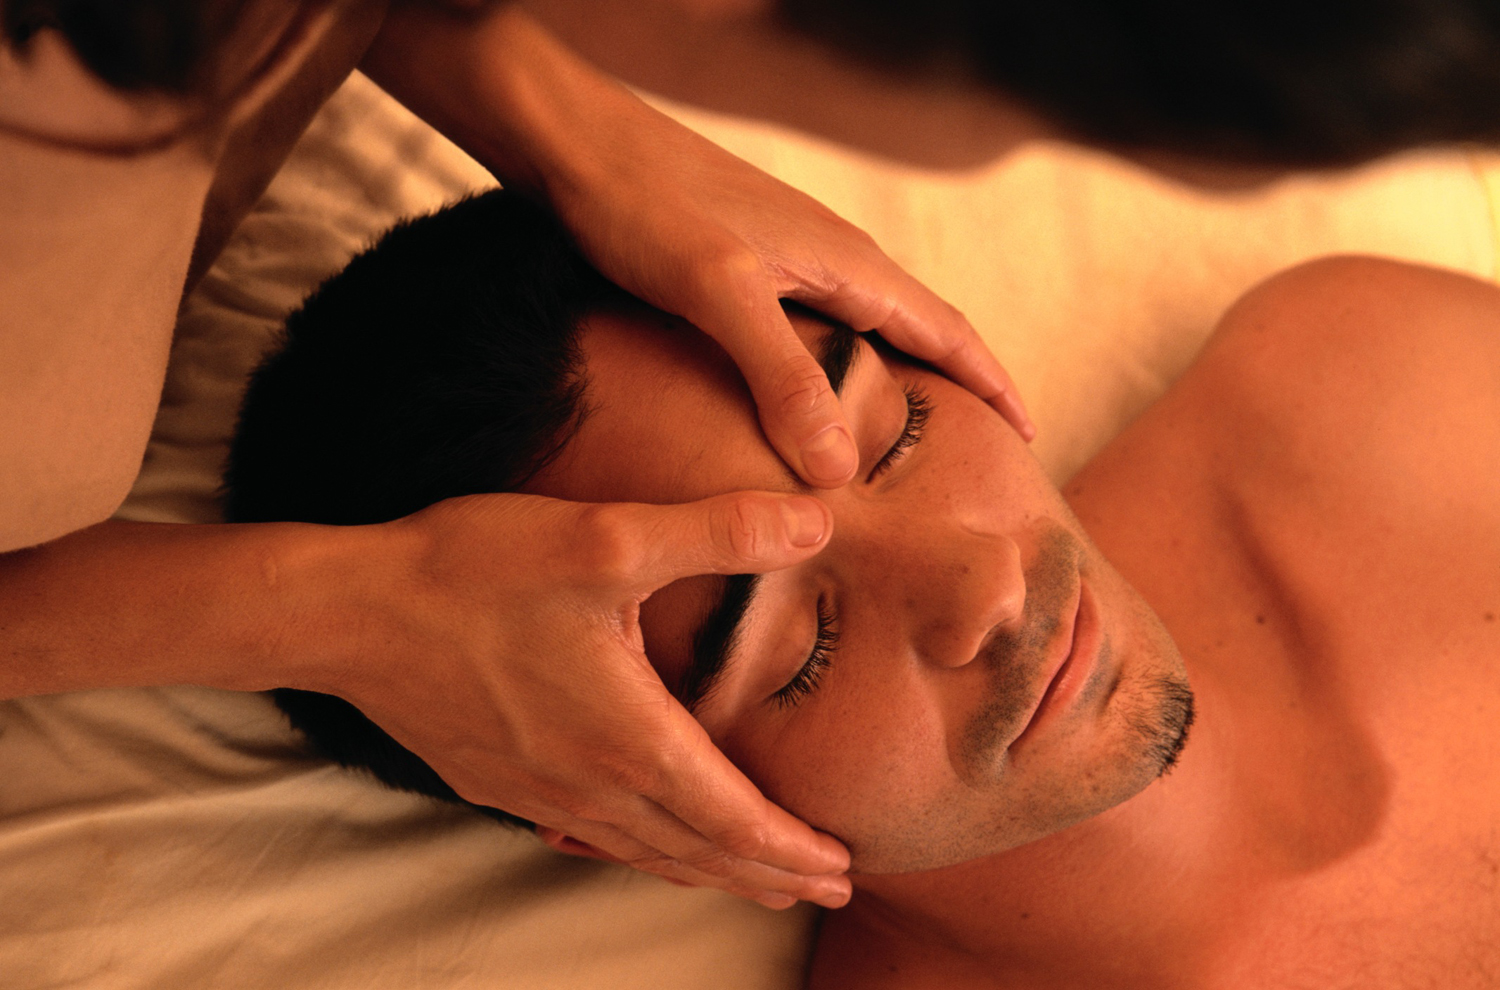 Full body bizarre facial massage images